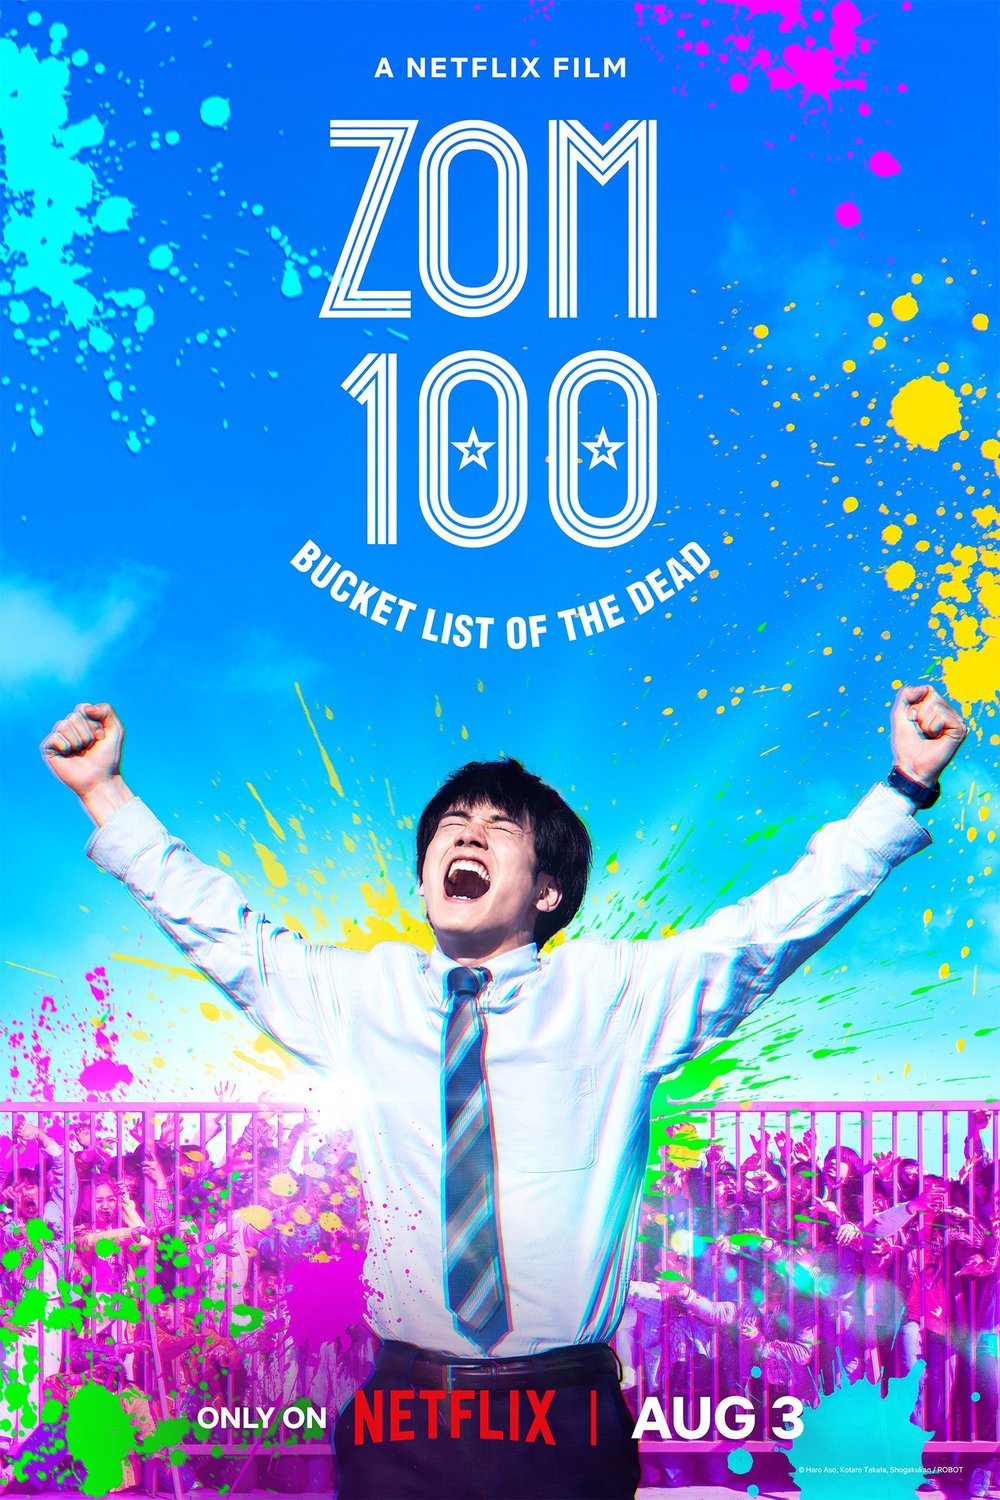 Japanese poster of the movie Zom 100: Zombie ni Naru made ni Shitai 100 no Koto